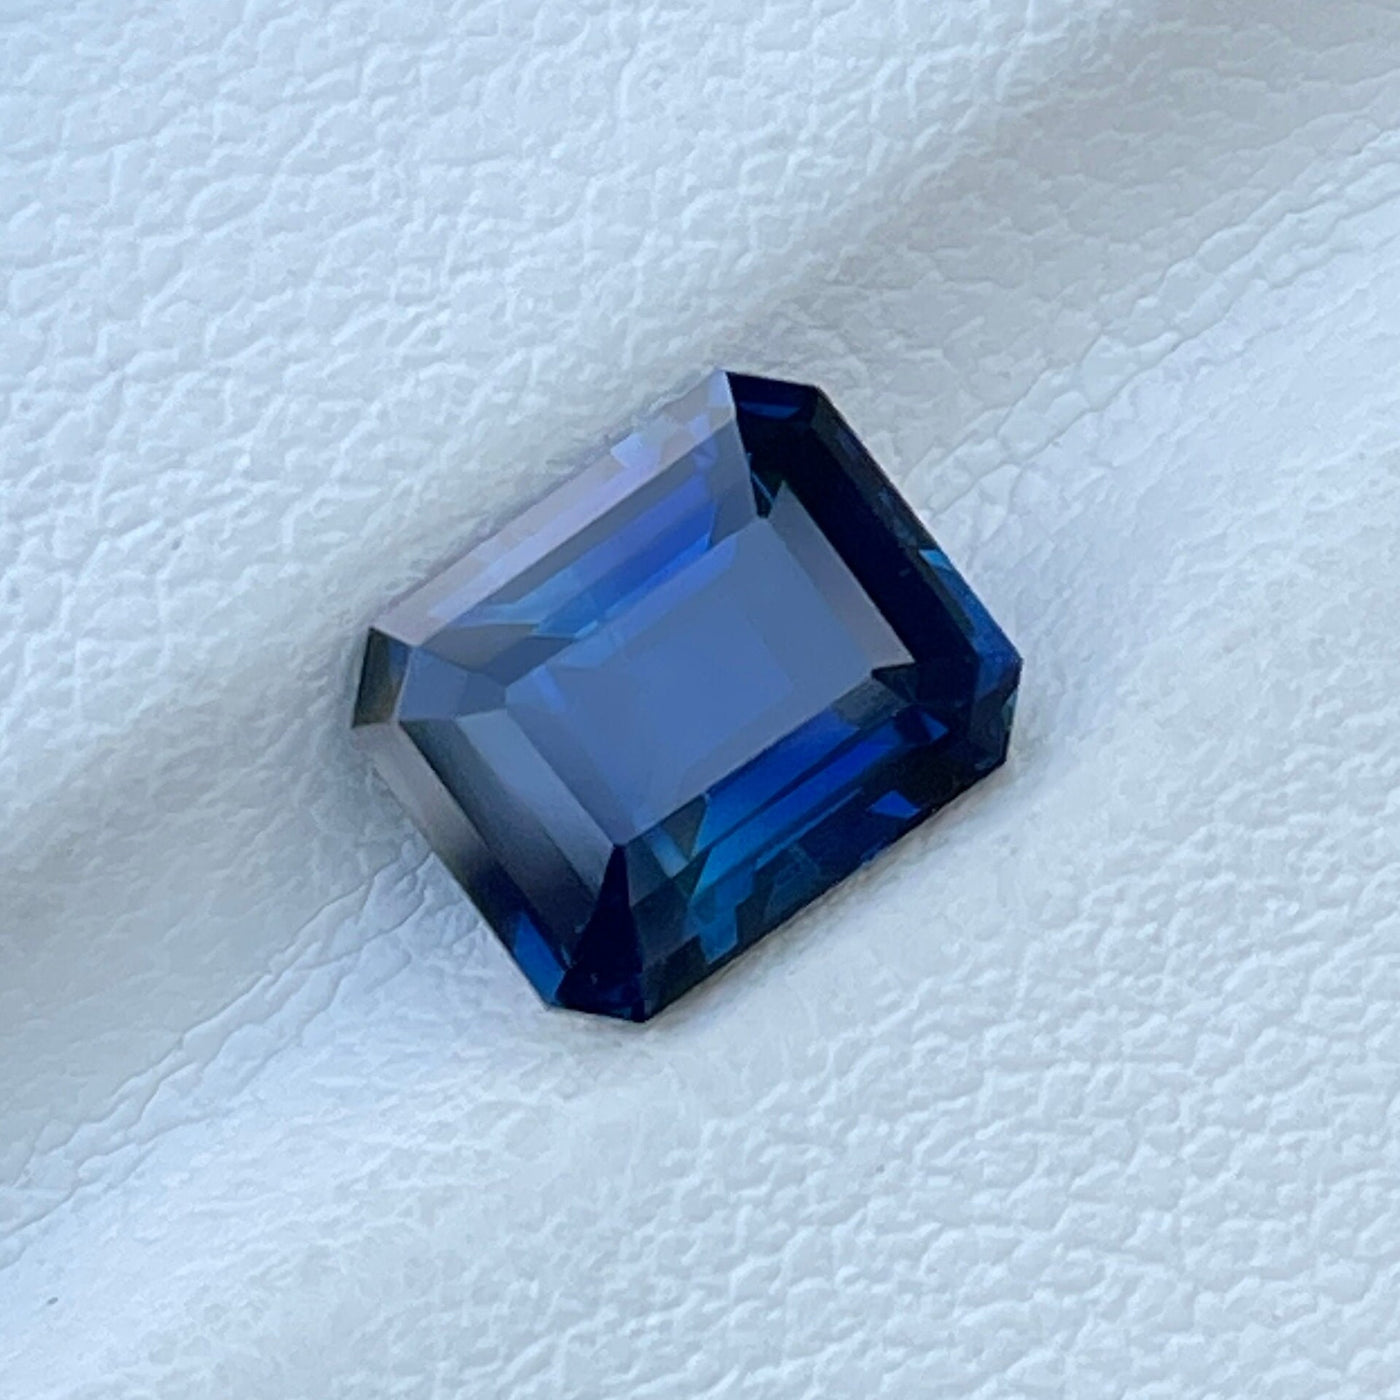 Blue Sapphire 2.02Ct